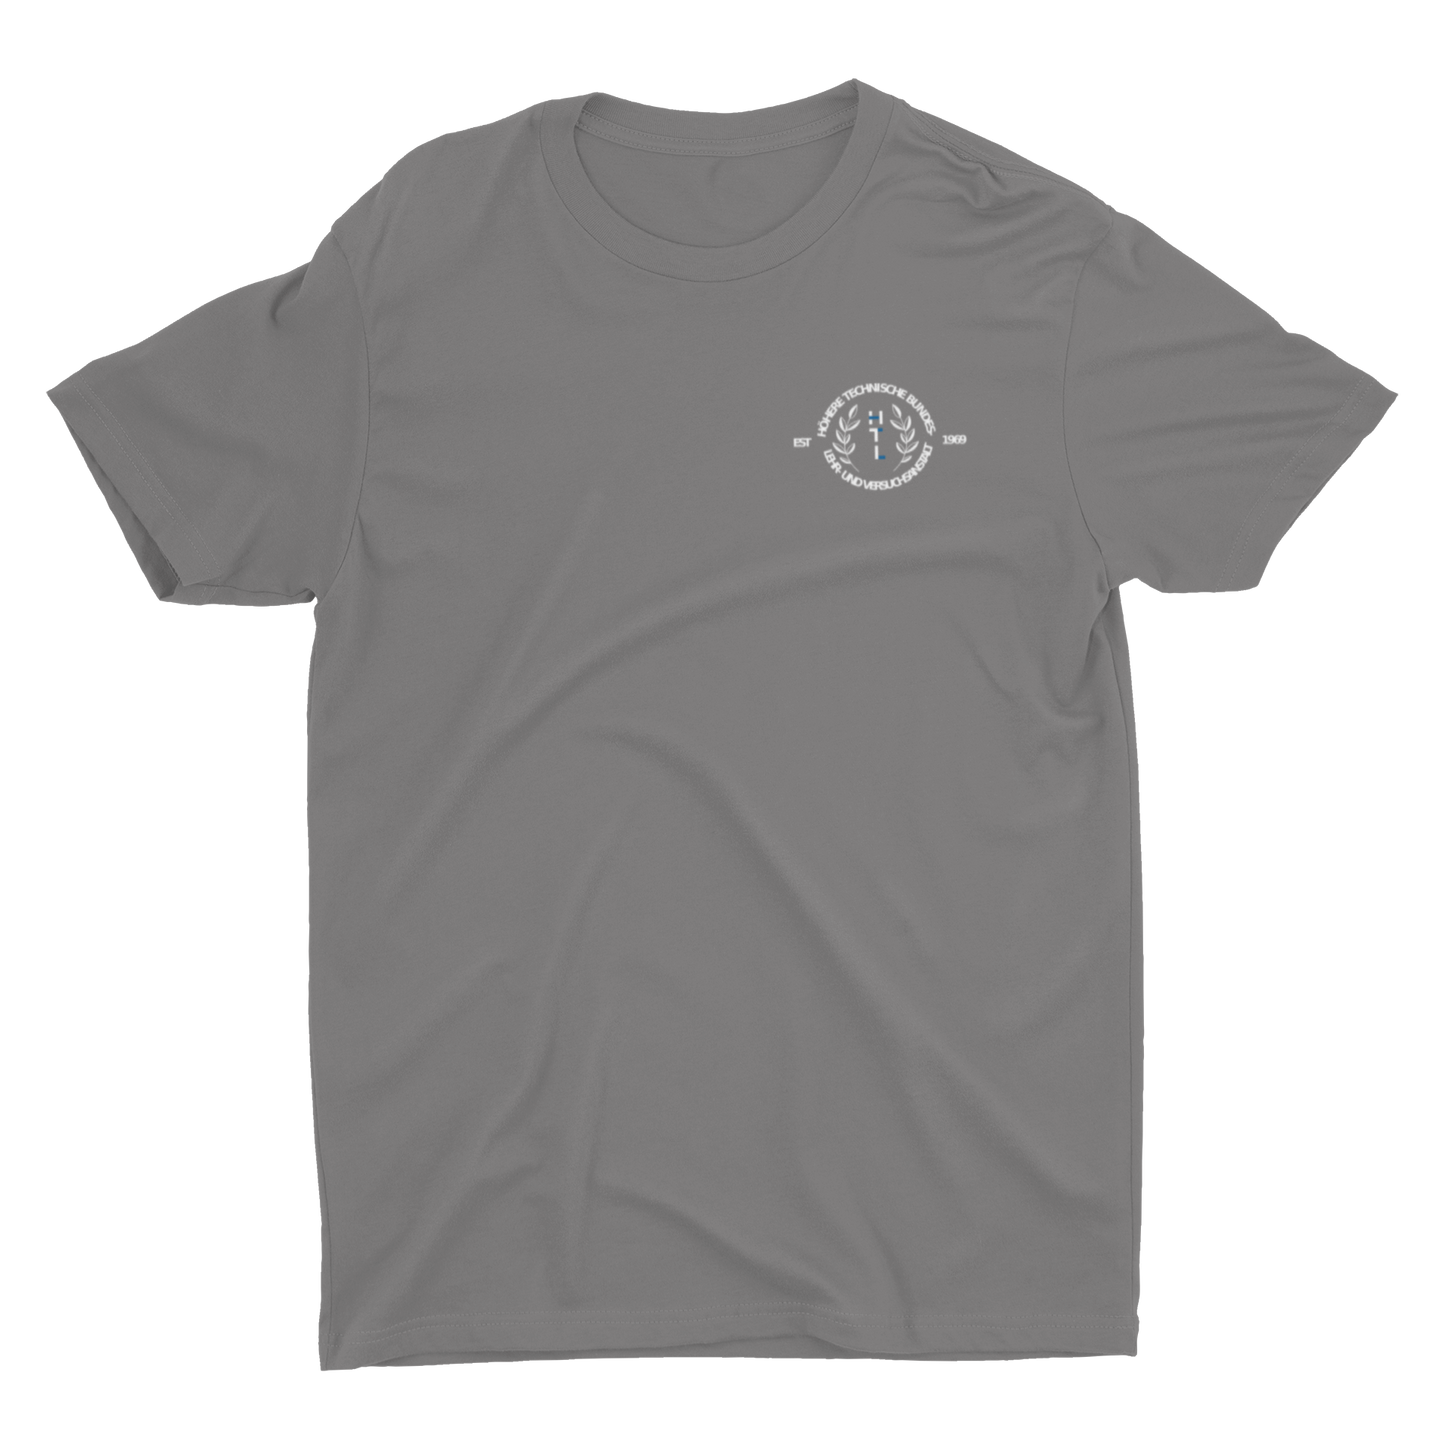 HTL Rankweil - Basic T-Shirt - Dunkel Frontprint